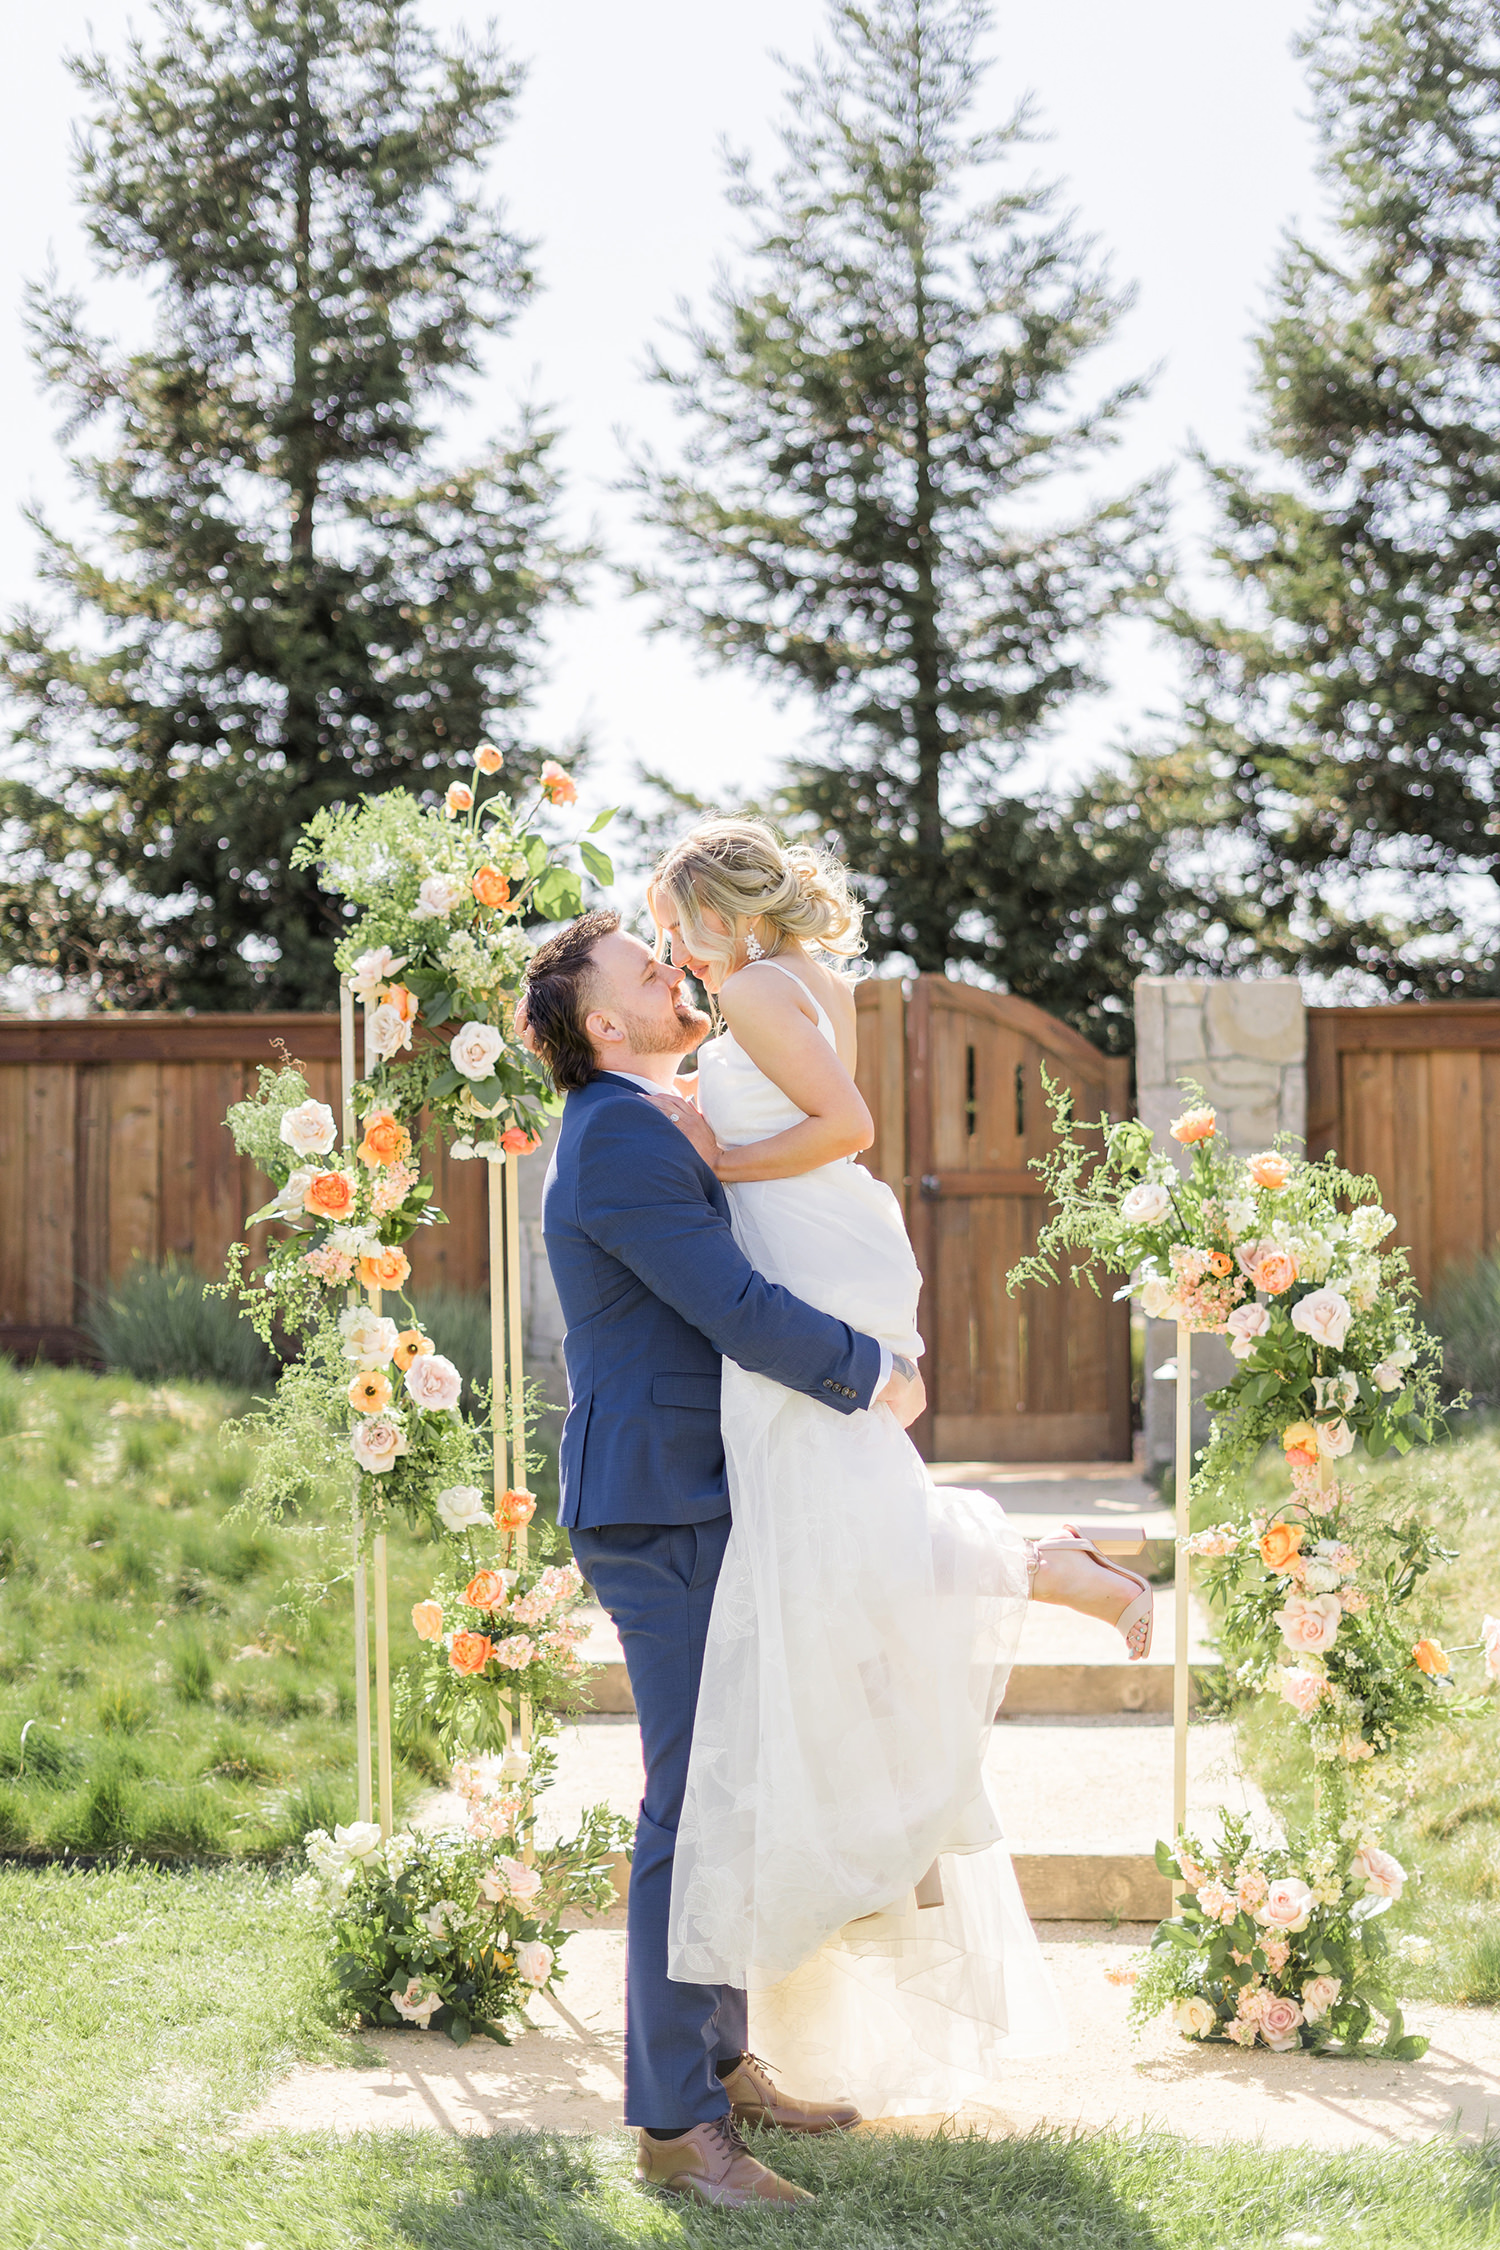 Bride and Groom Wedding Day Portraits at their Cornerstone Gardens Sonoma Wedding by Adrienne & Dani Photography